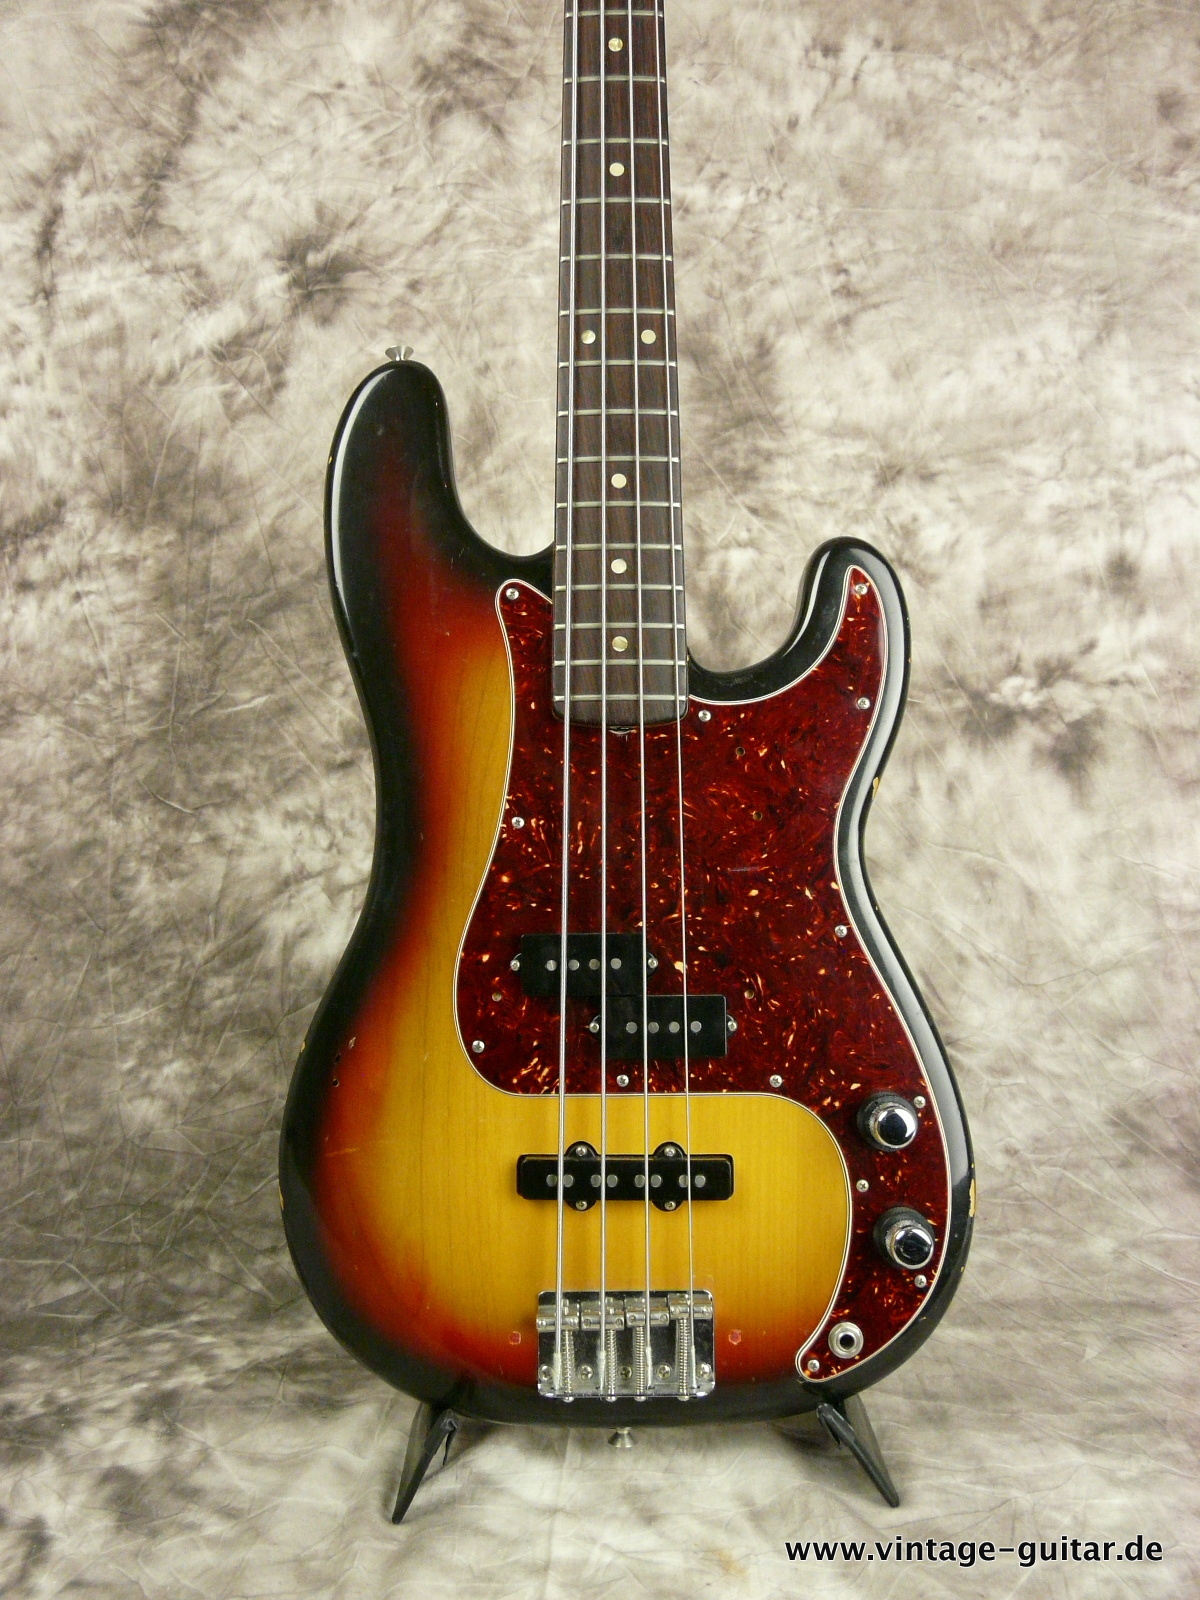 Fender-Precision_Bass-1973-sunburst-J-Bass-Pickup-002.JPG